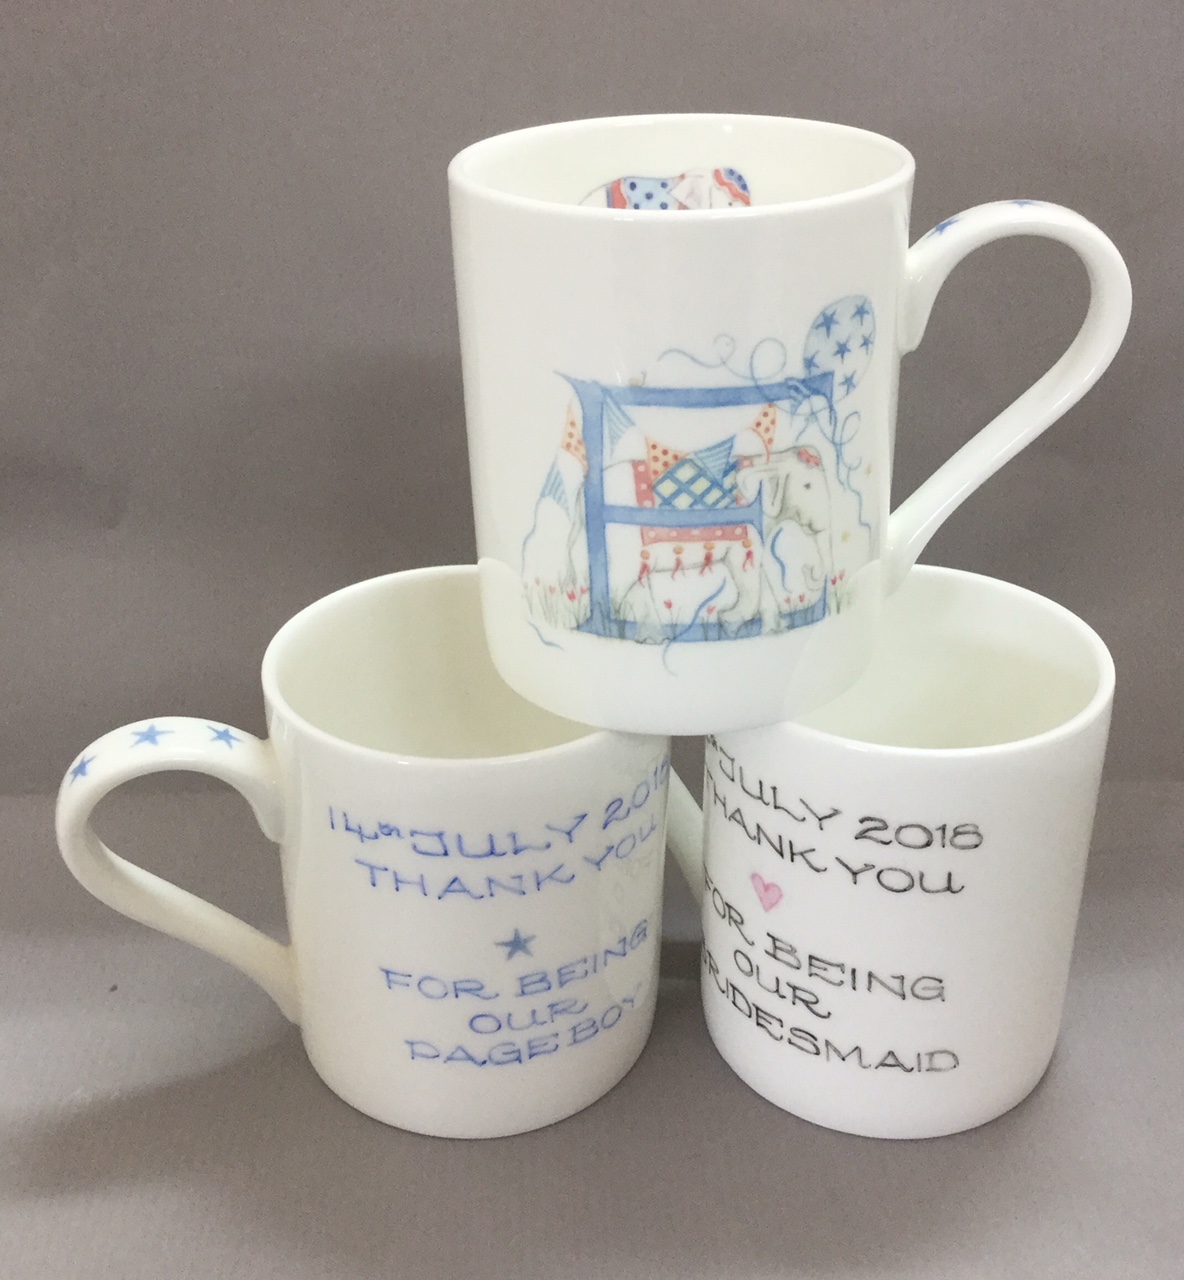 Personalised Children's Mugs, from £10